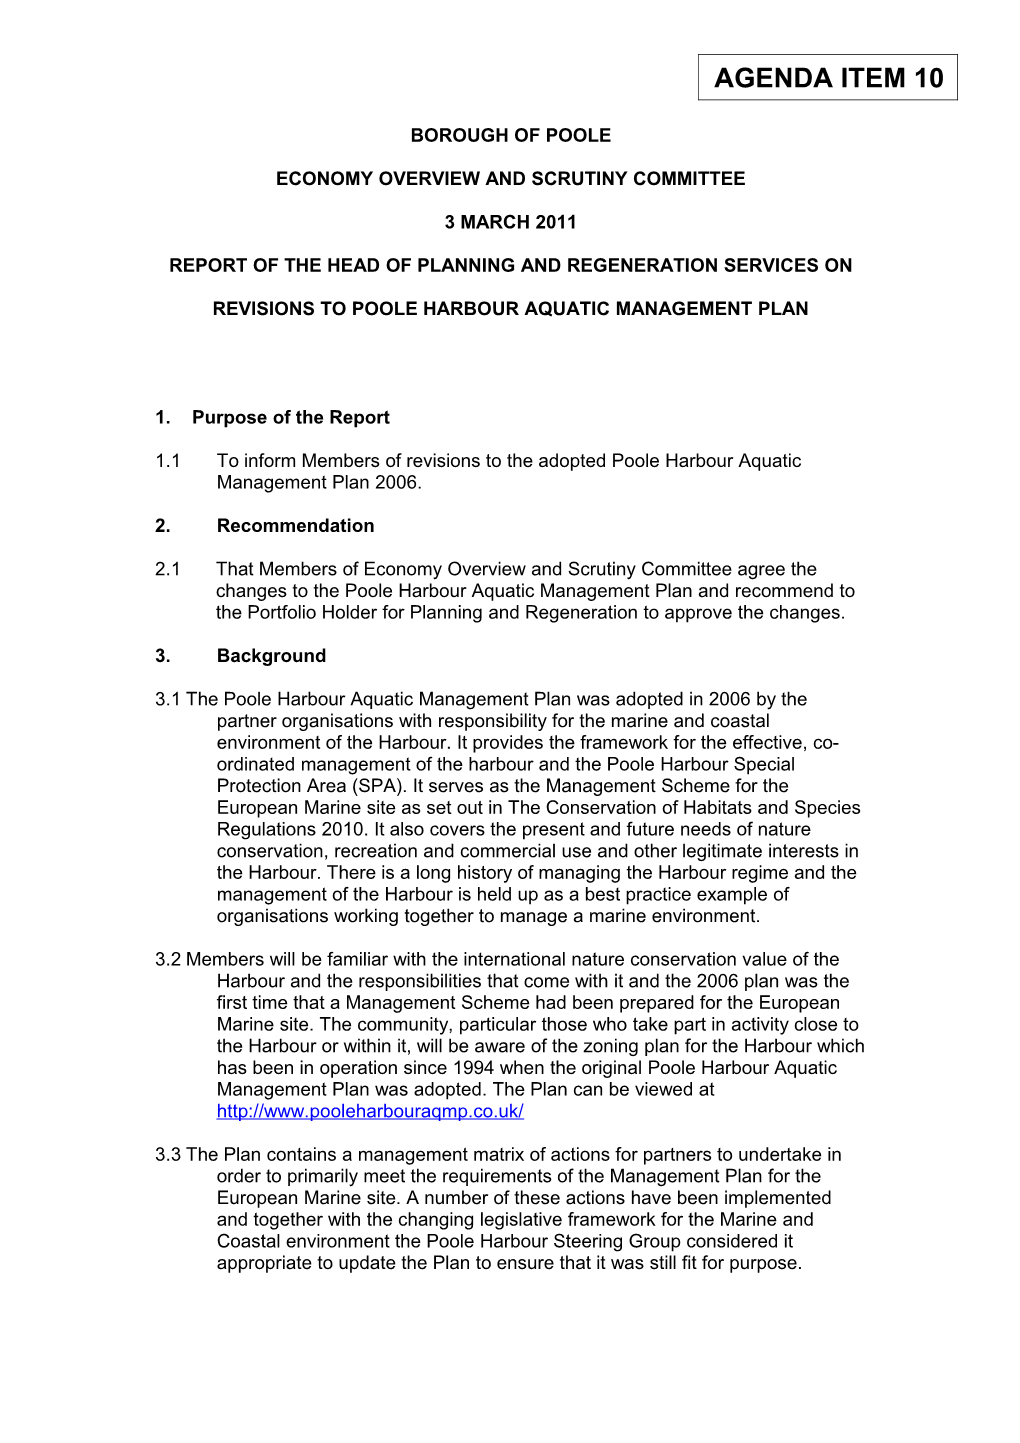 Revisions to Poole Harbour Aquatic Management Plan